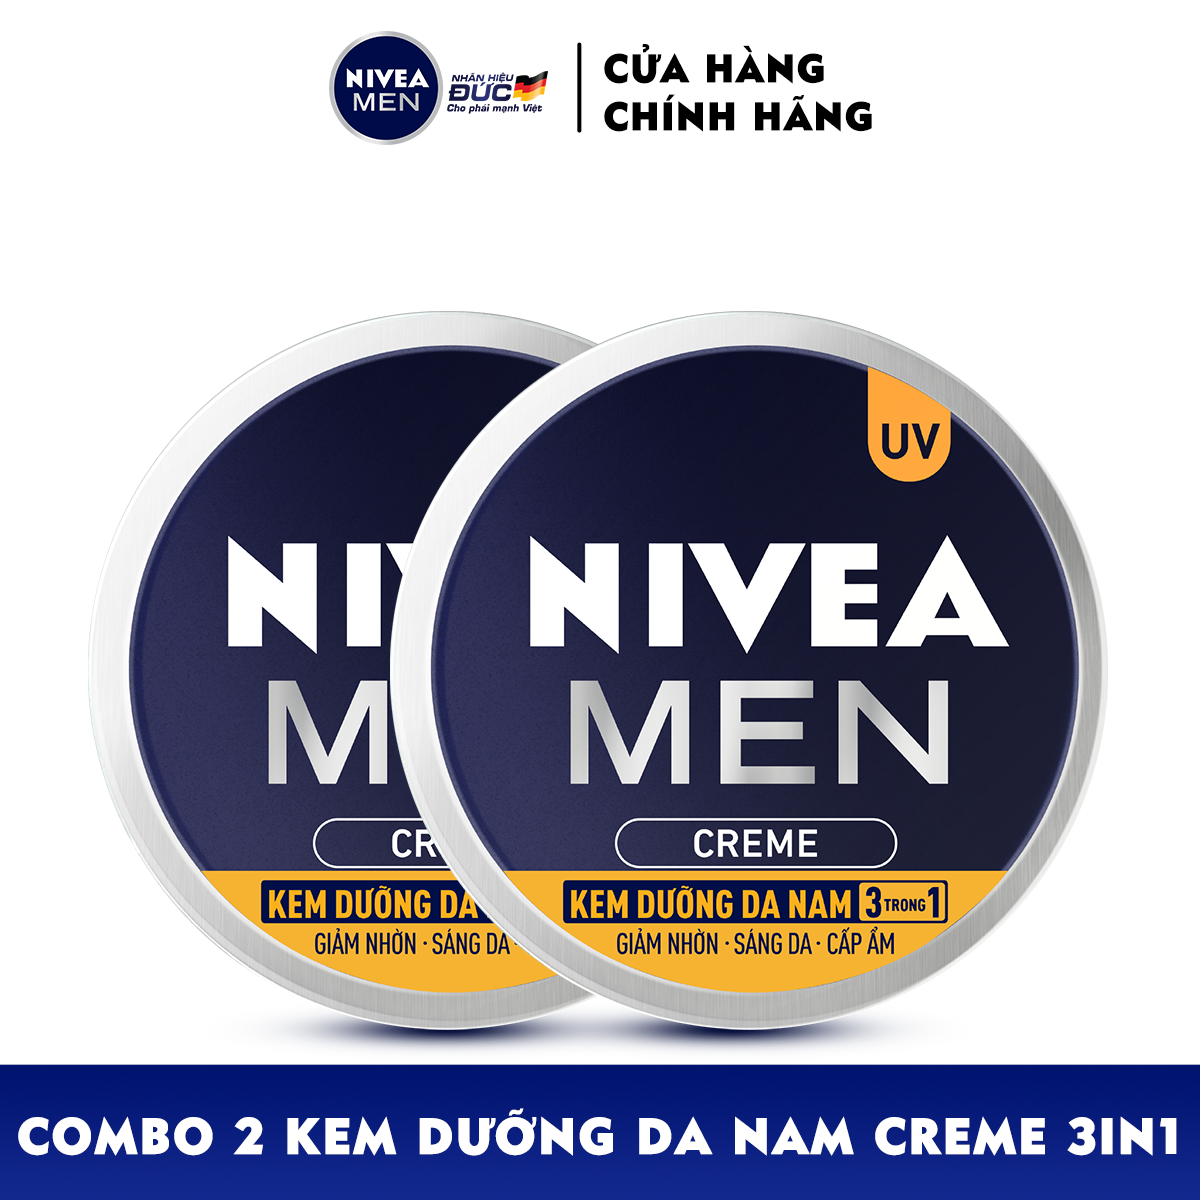 Combo 2 Kem Dưỡng Da Nam NIVEA MEN Creme 3in1 Giúp Giảm Nhờn, Sáng Da, Cấp Ẩm (30ml) - 83923